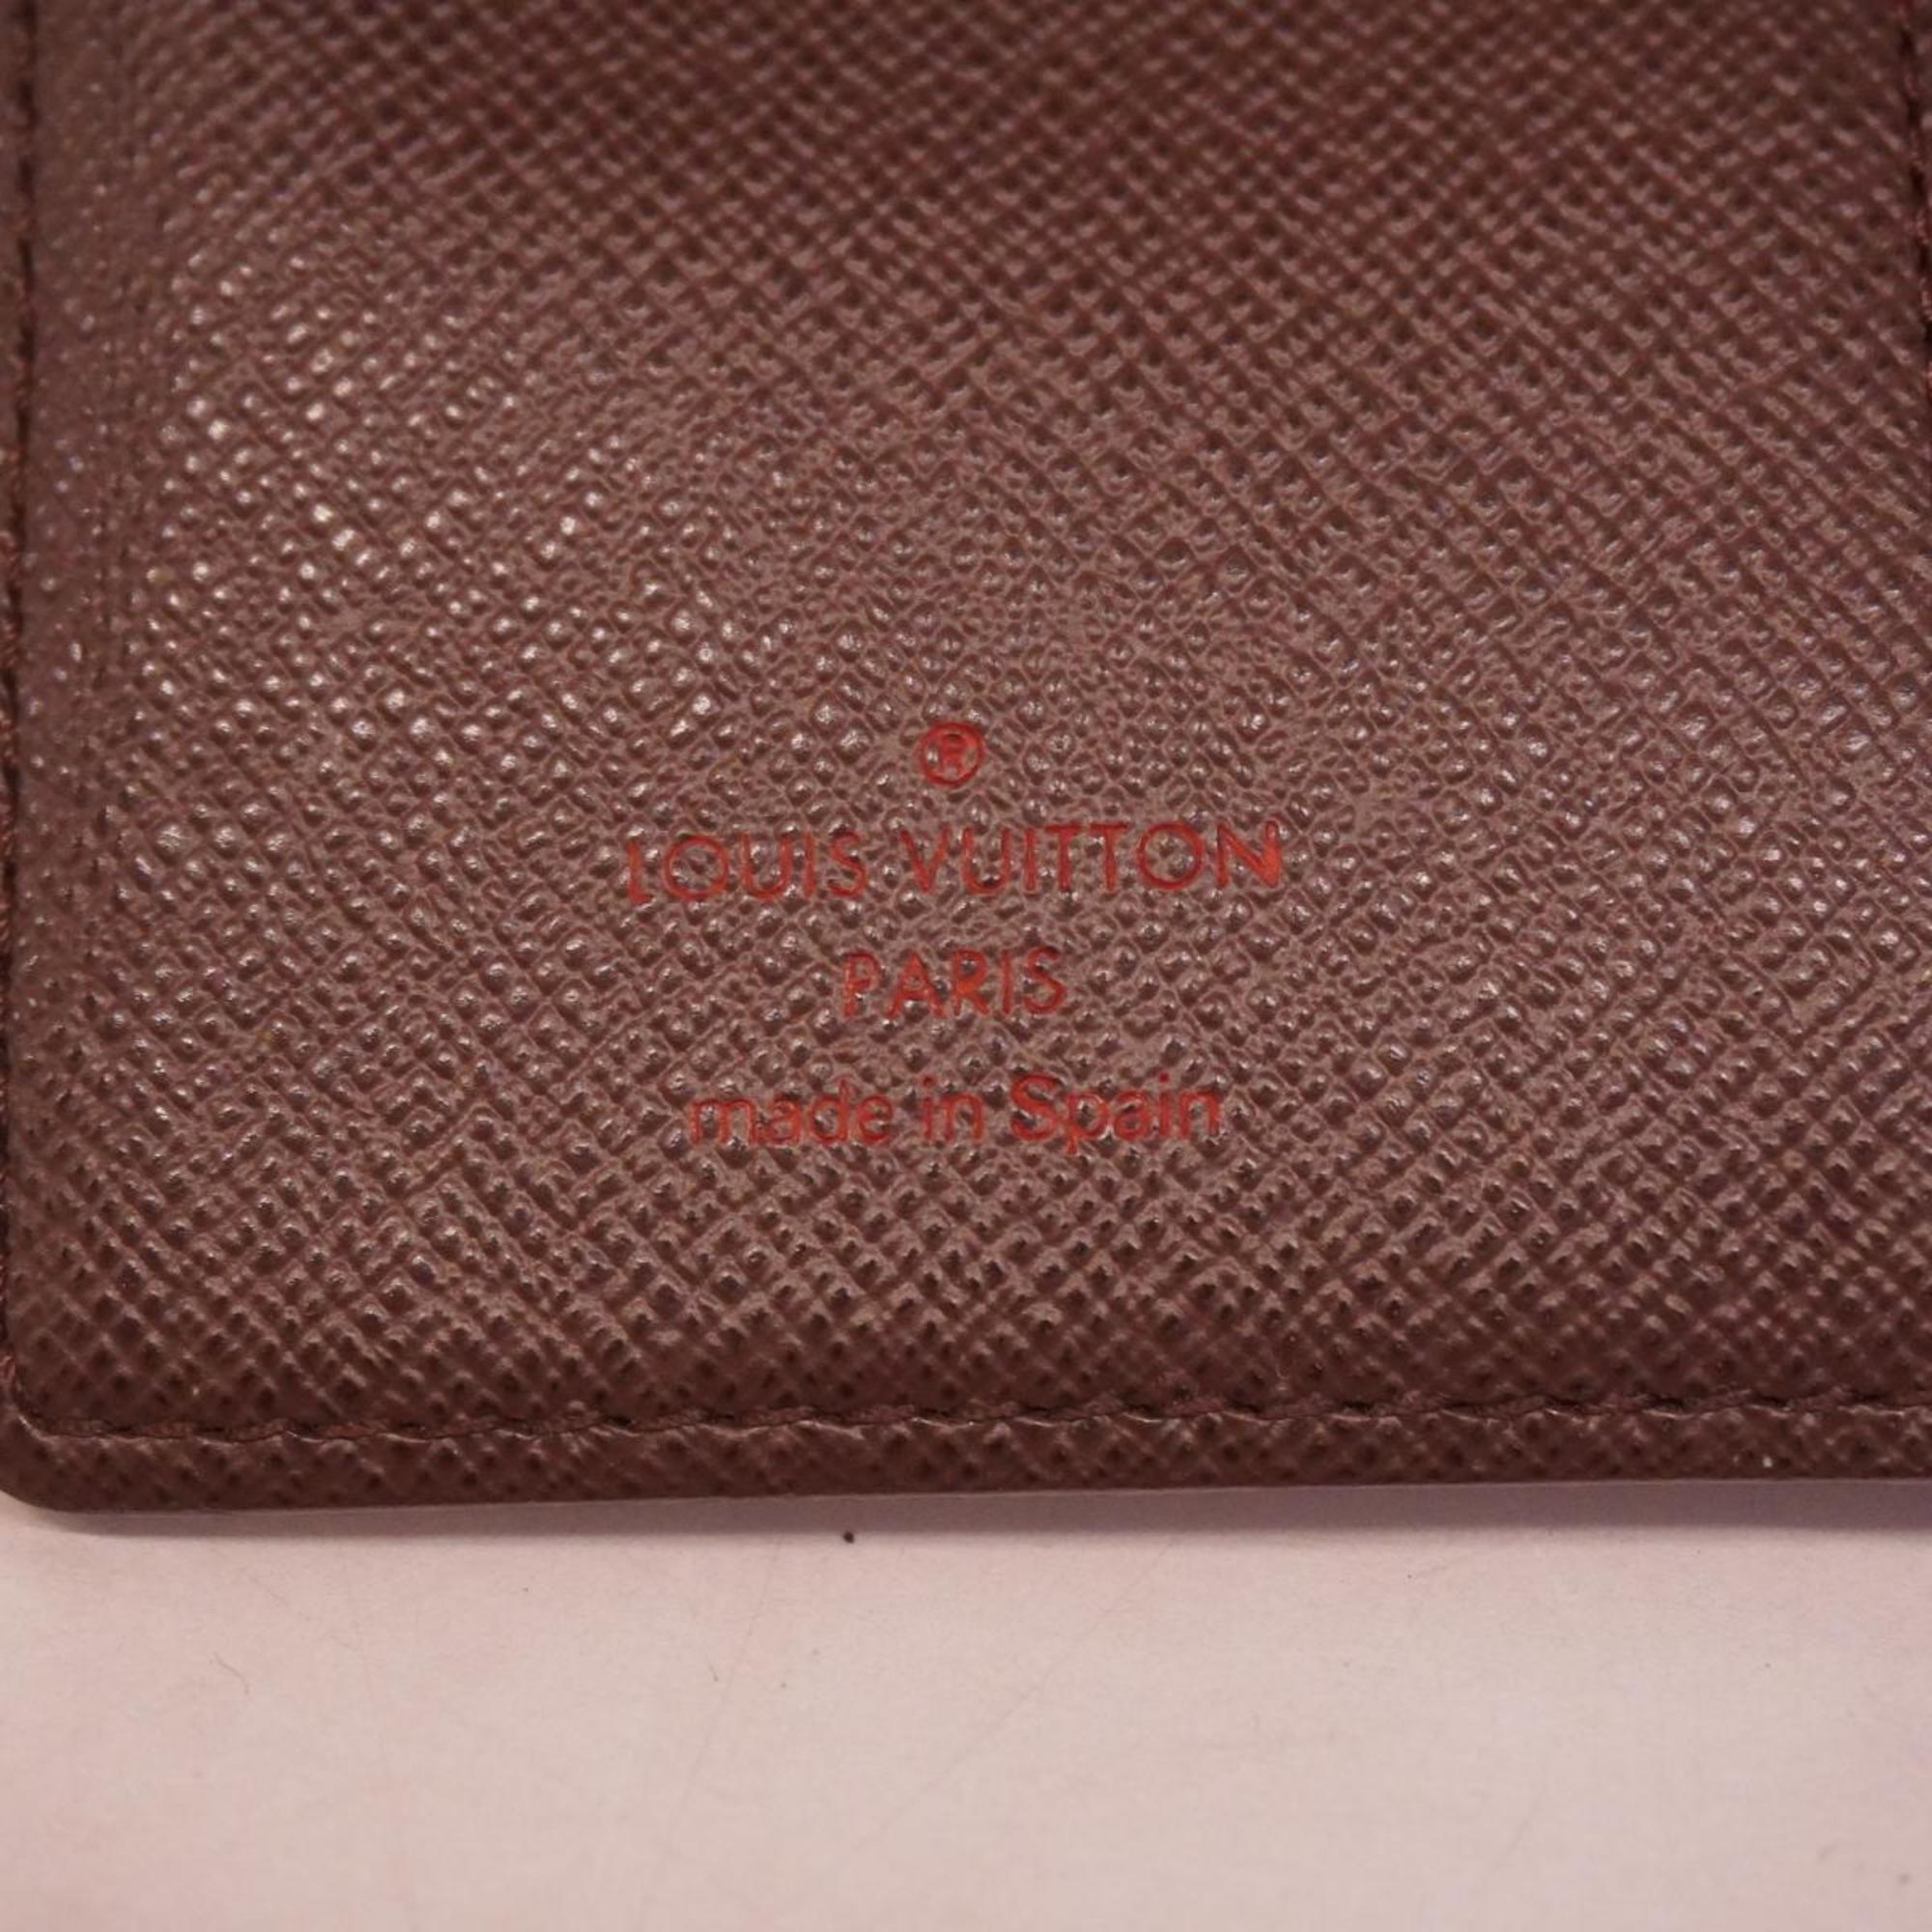 Louis Vuitton Diary Cover Damier Agenda PM R20700 Ebene Men's Women's